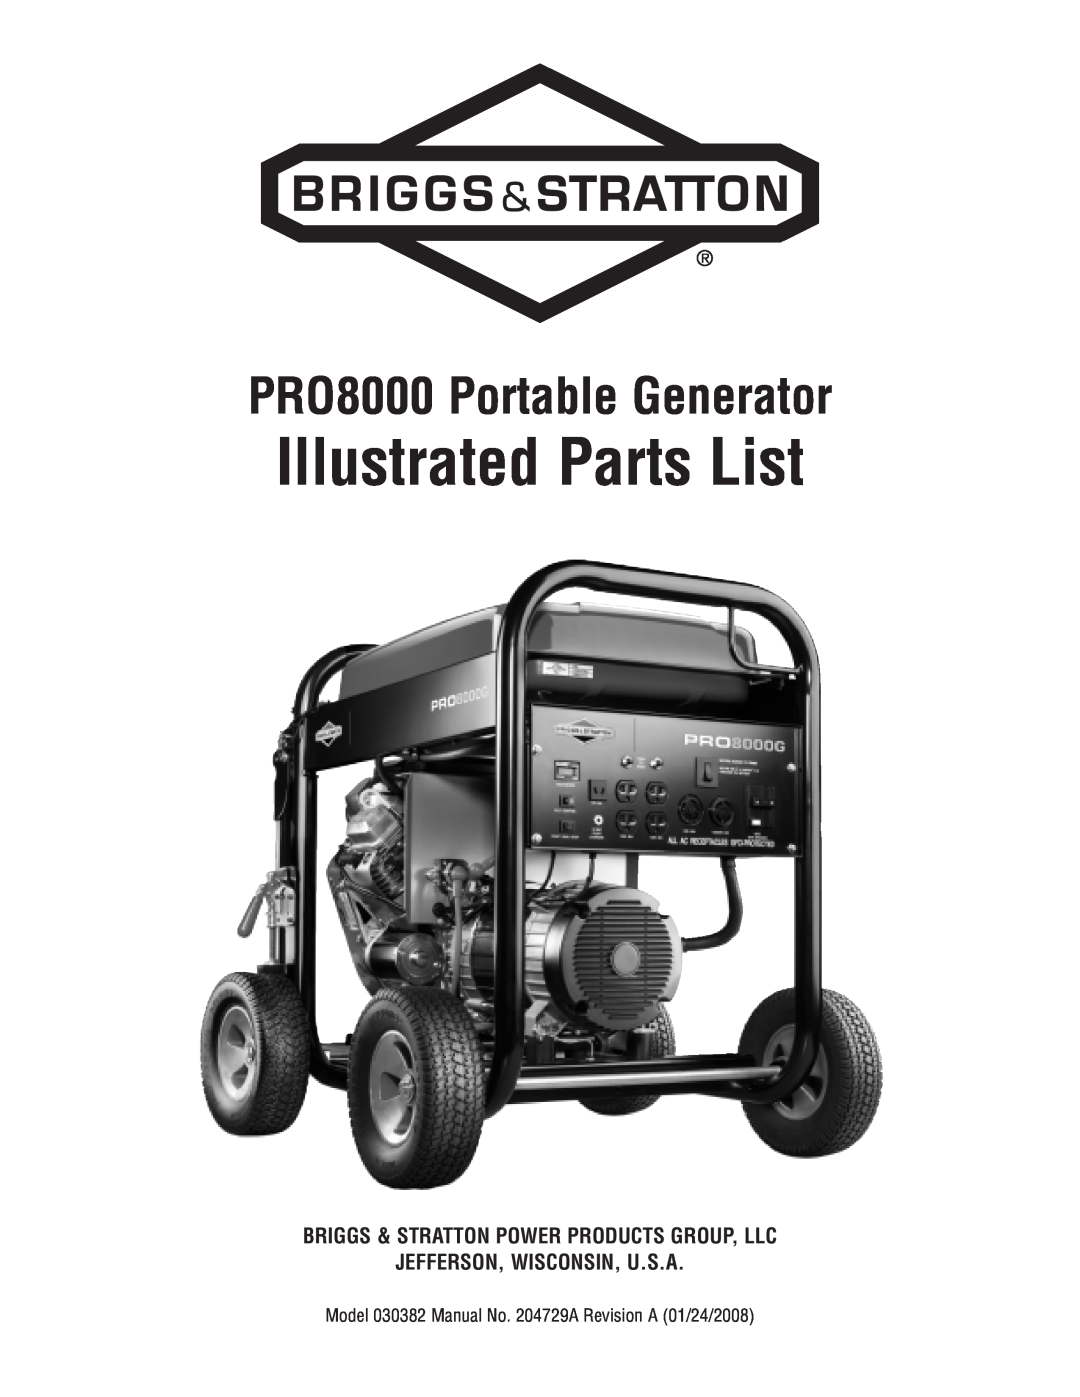 Briggs & Stratton 30382 manual Illustrated Parts List, PRO8000 Portable Generator, Jefferson, Wisconsin, U.S.A 